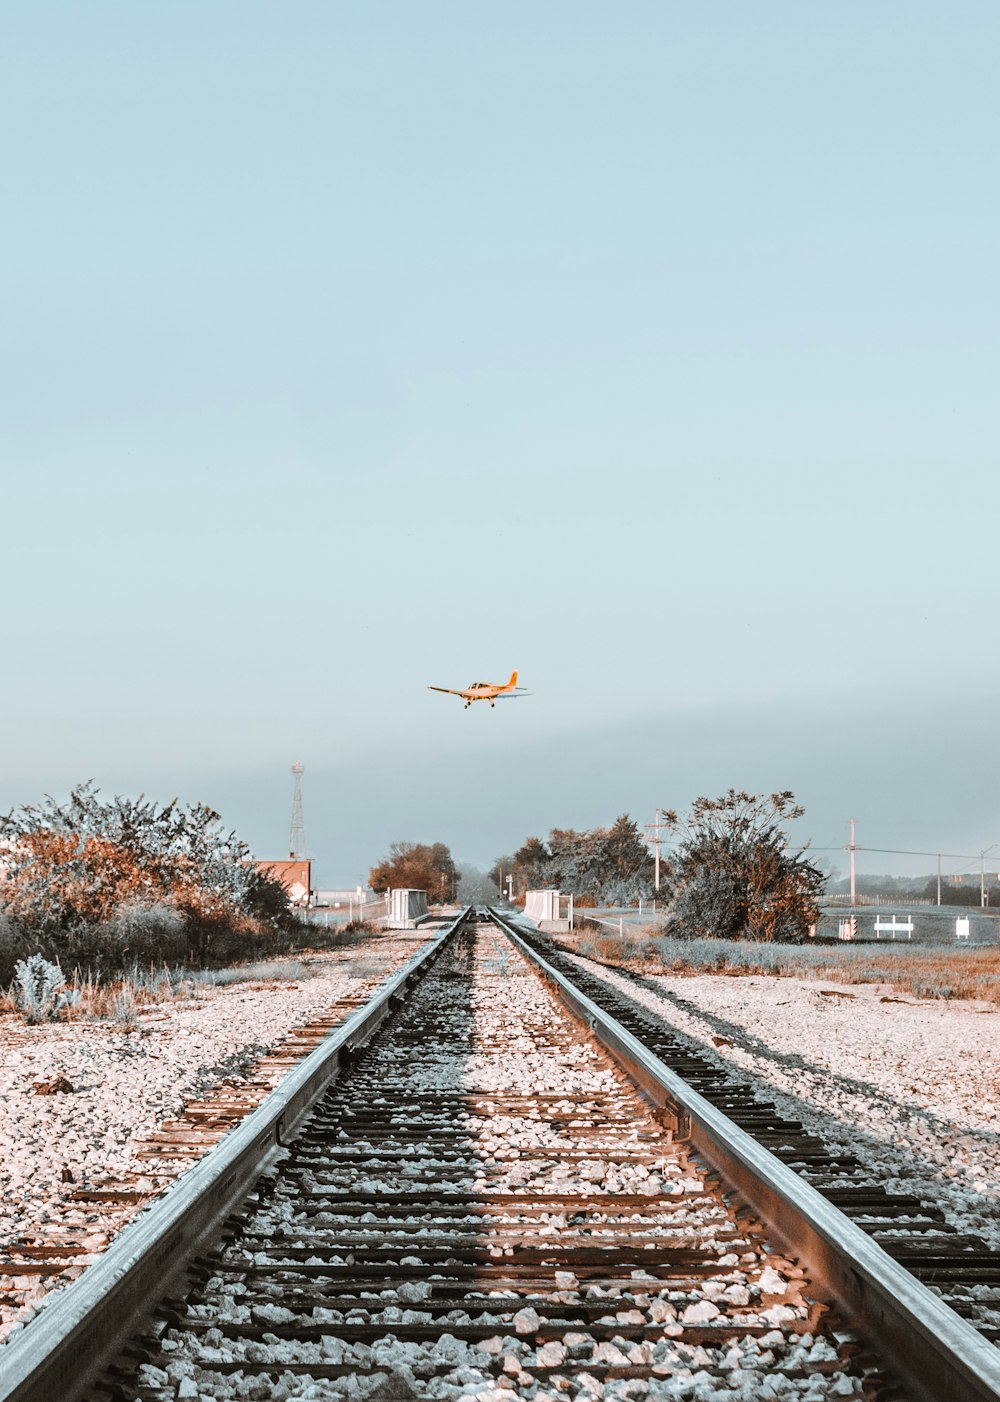 orange monoplane flying above a railroad